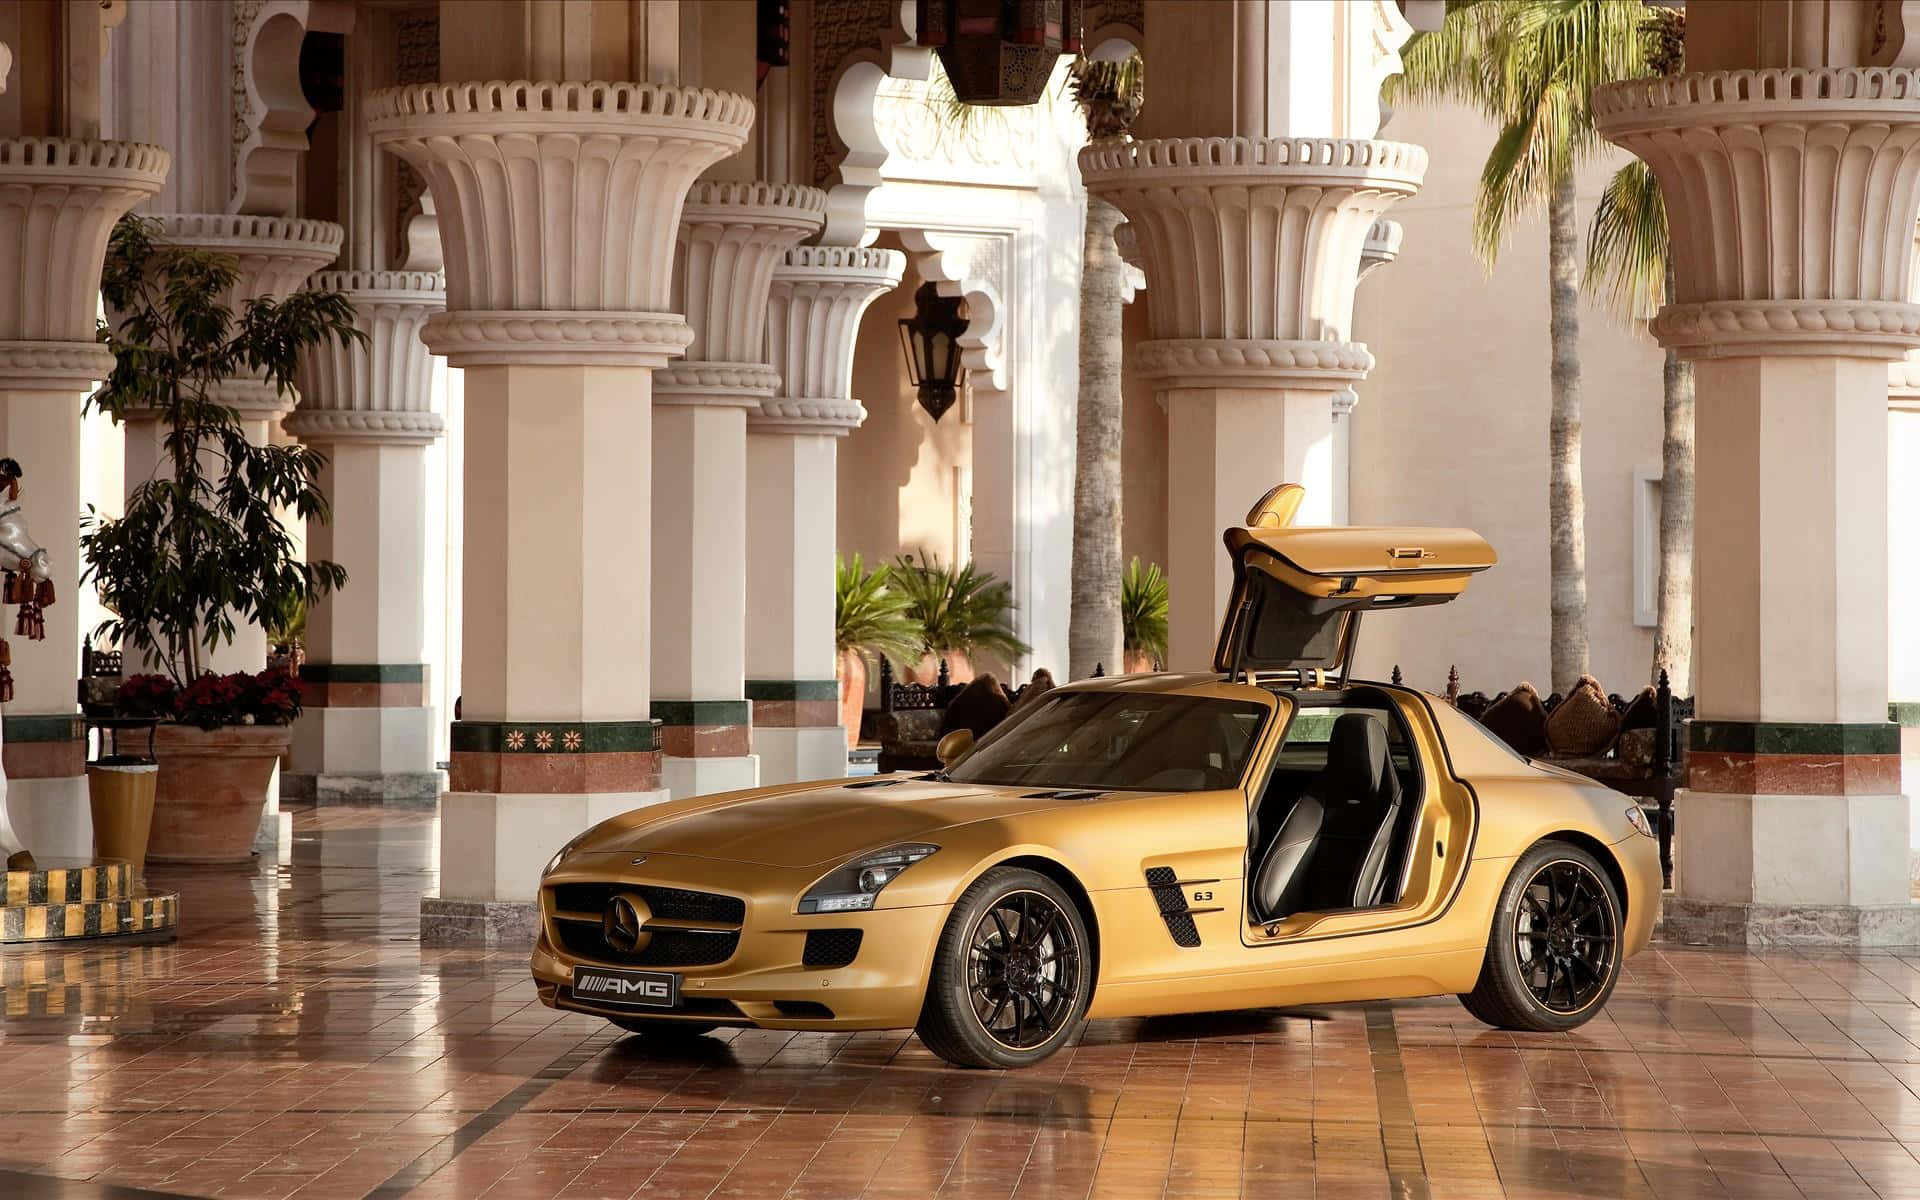 Gold Cars Inside Fancy Estate